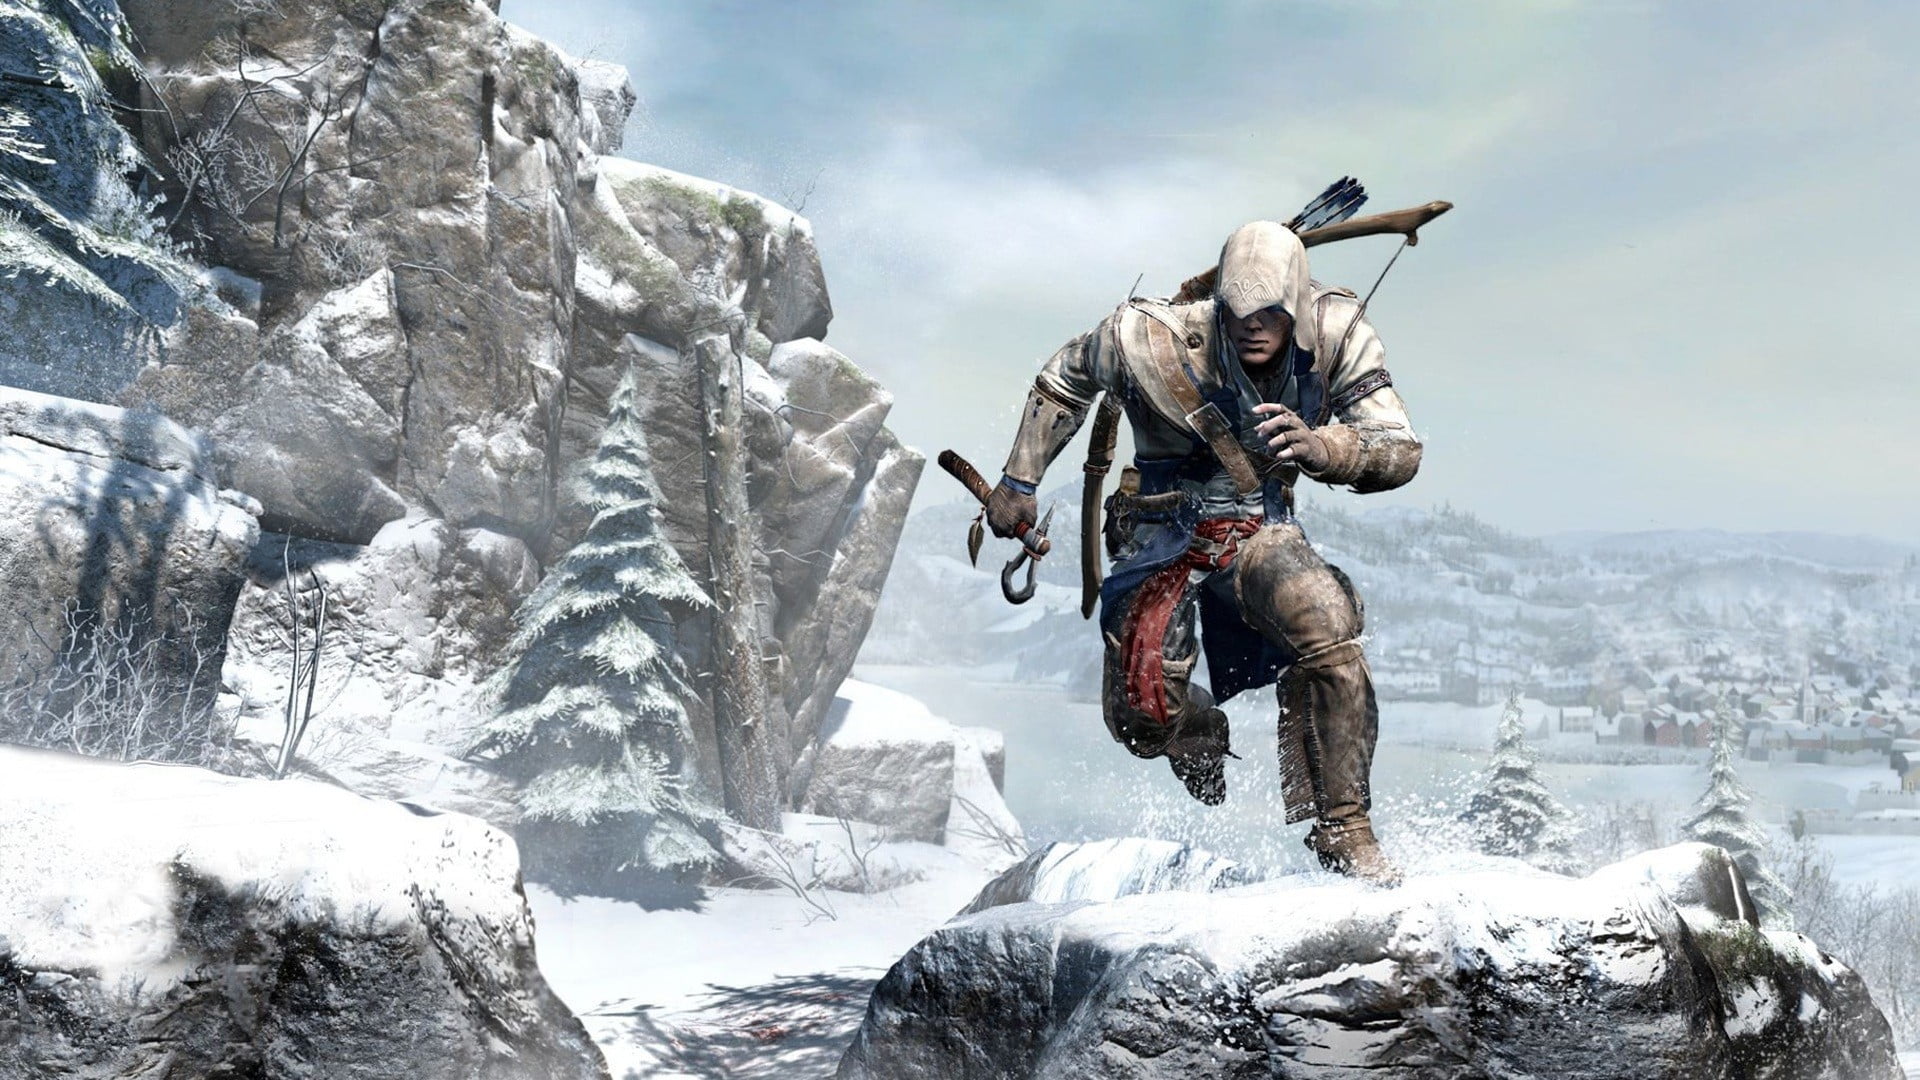 Assassin's Creed digital wallpaper, Assassin's Creed III, Connor Kenway, American Revolution, video games